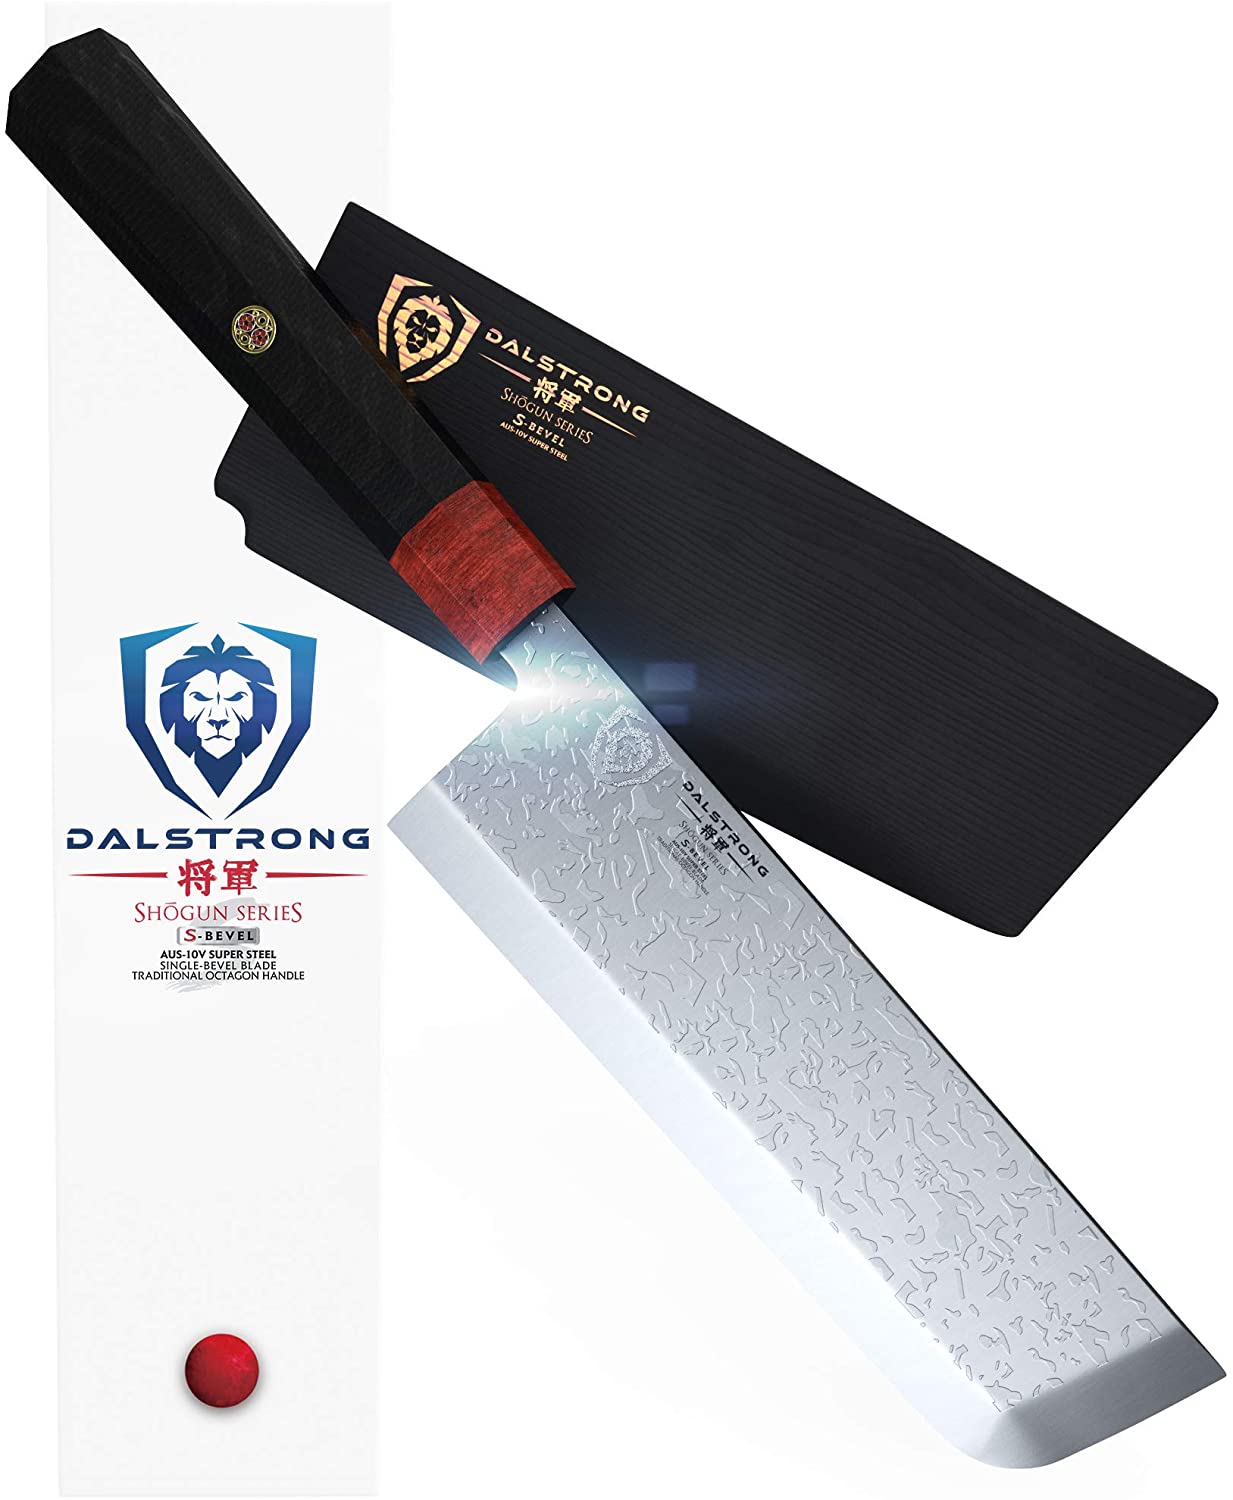 DALSTRONG Usuba Knife Shogun S Series Knife, 6-Inch